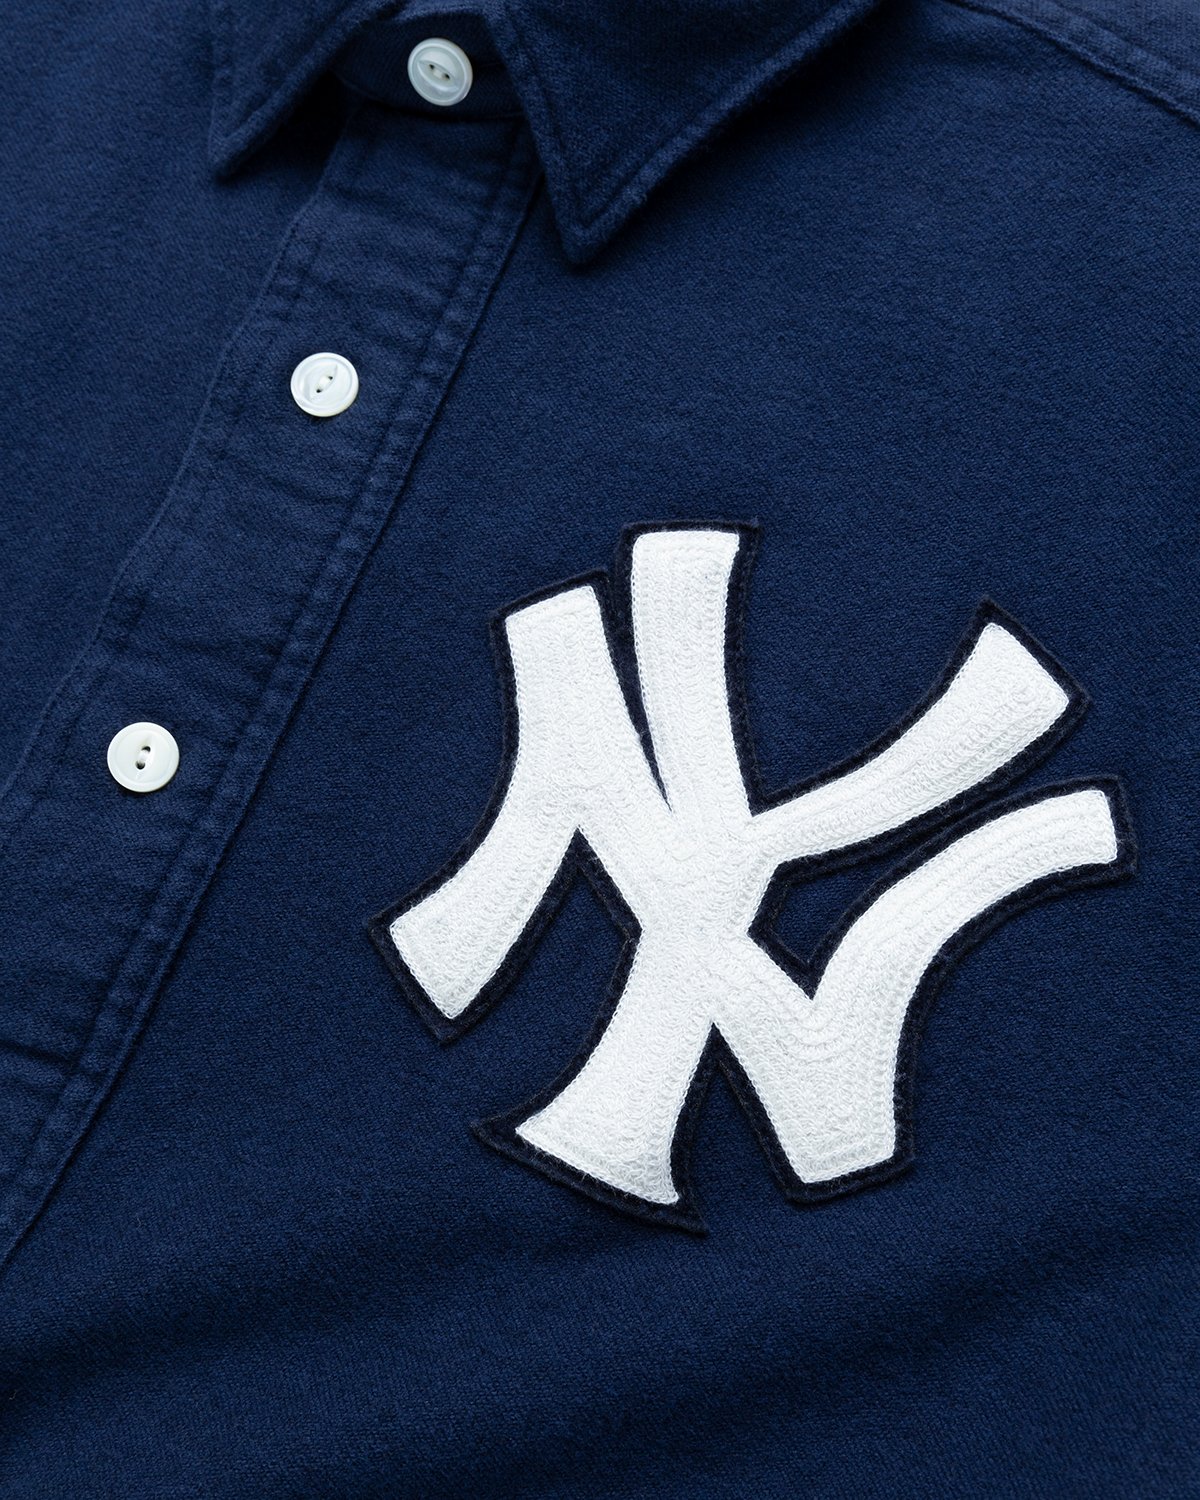 Ralph Lauren - Yankees Popover Shirt Navy - Clothing - Blue - Image 6